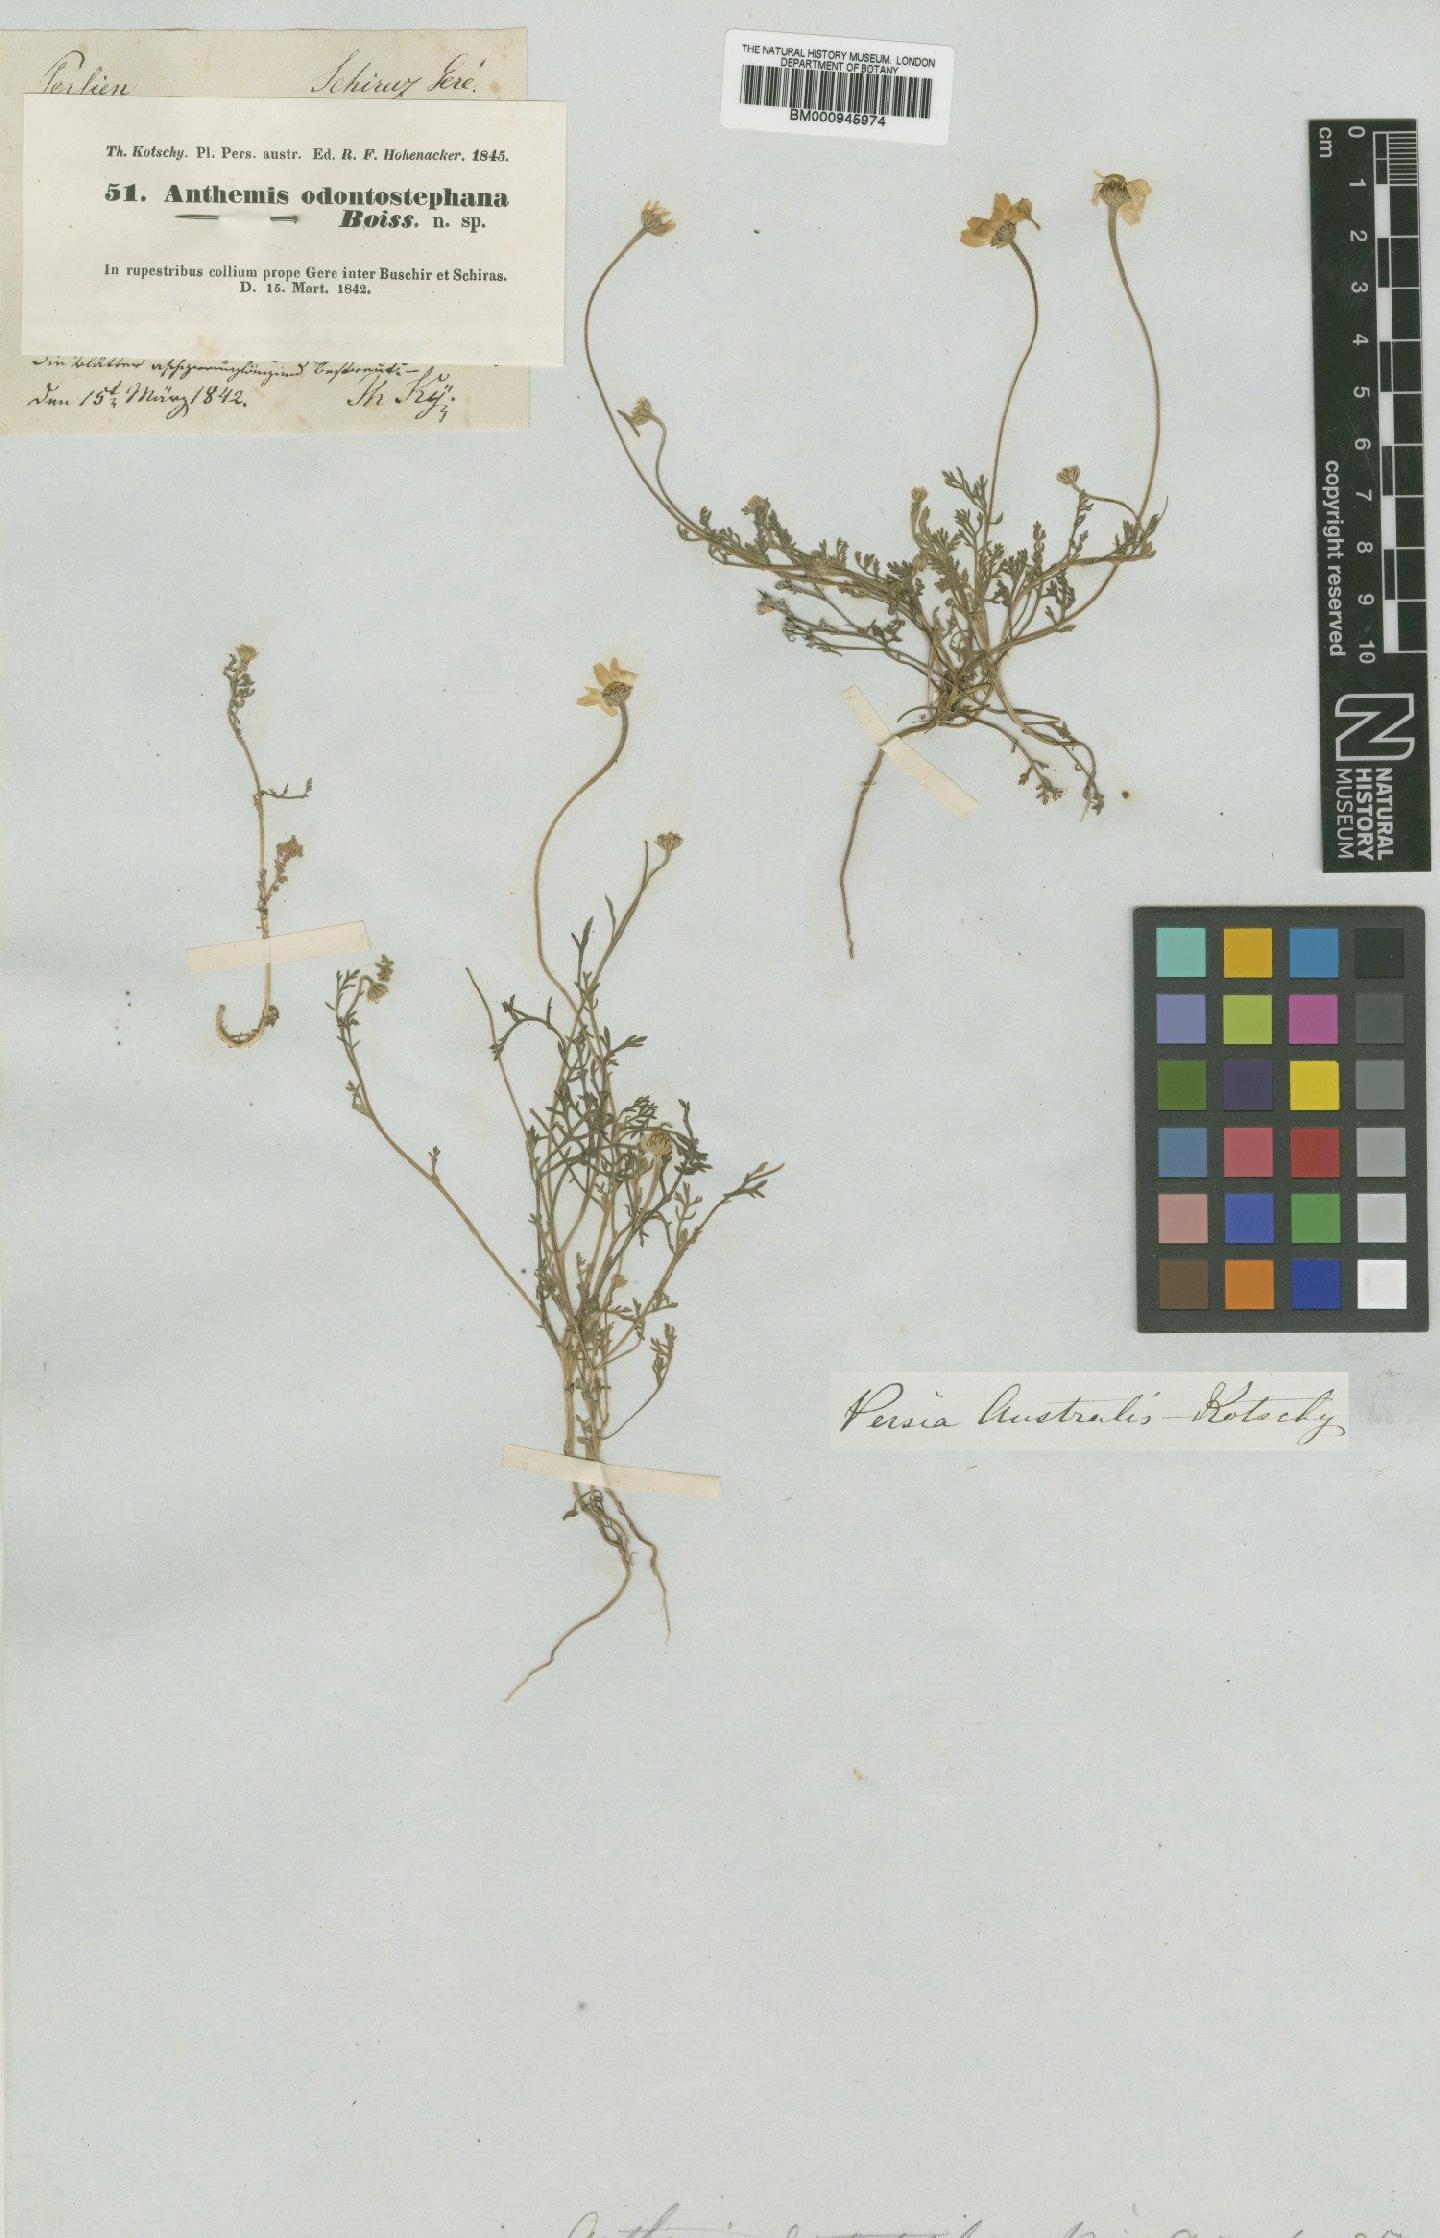 To NHMUK collection (Anthemis odontostephana Boiss.; Type; NHMUK:ecatalogue:474155)